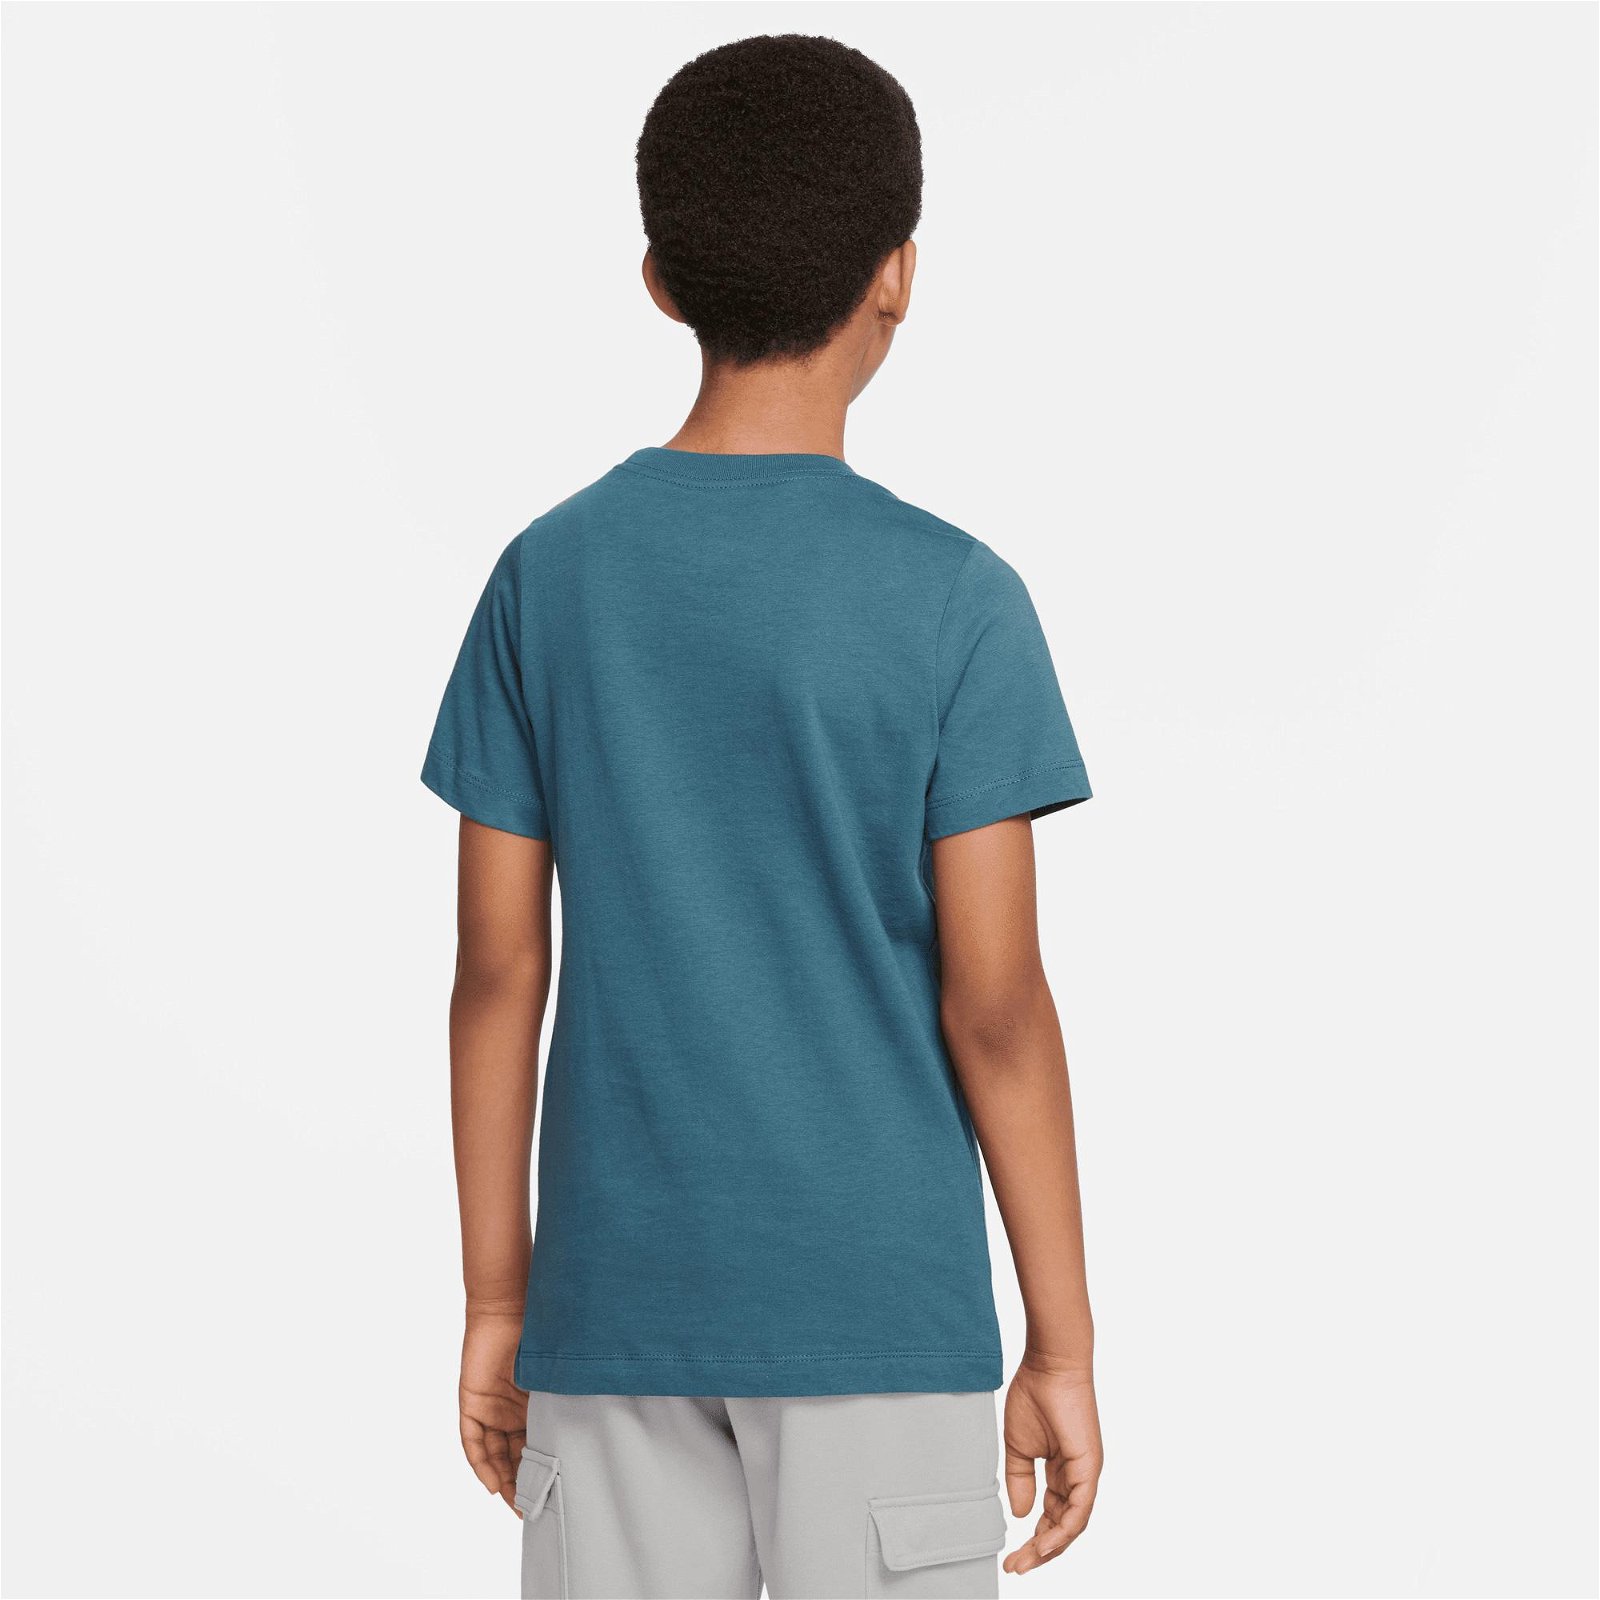 Nike Sportswear Air Fa20 1 Çocuk Yeşil T-Shirt